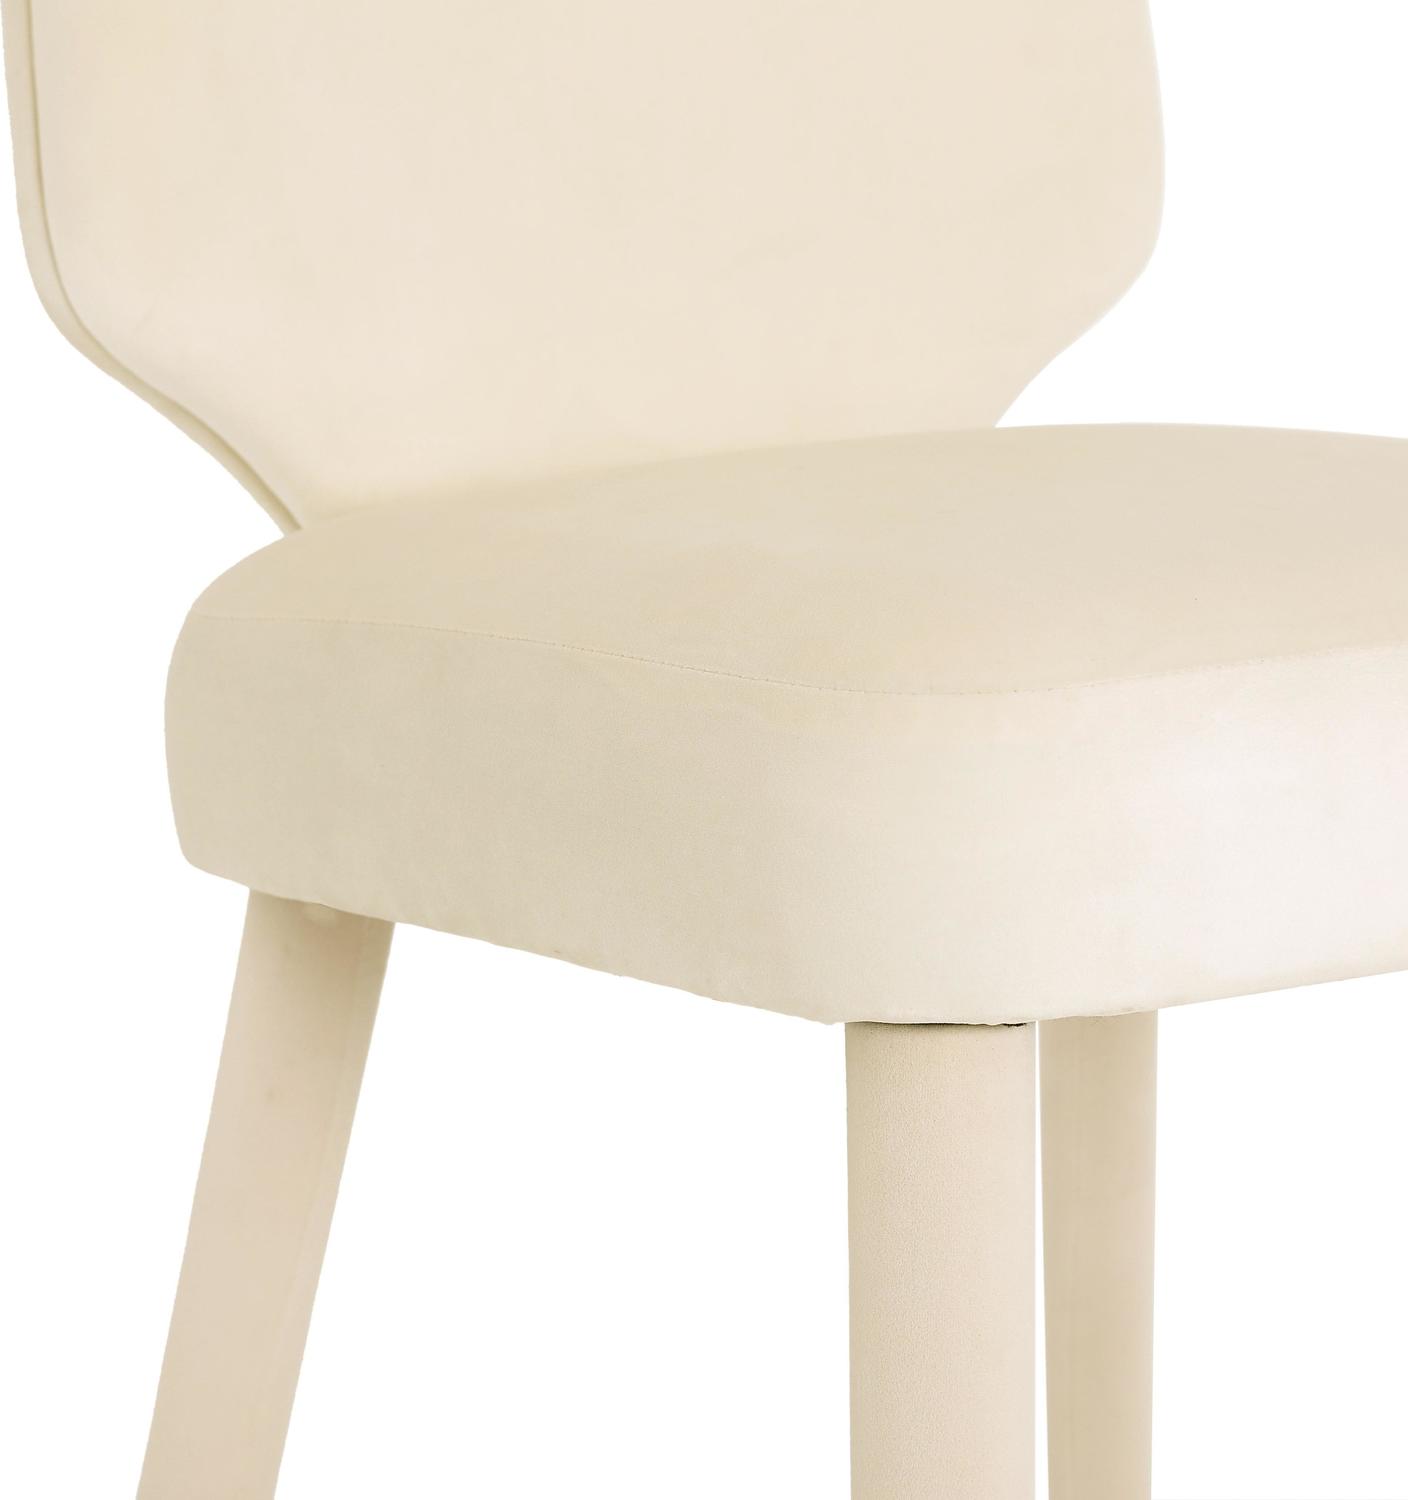 light pink bar stools Contemporary Design Furniture Stools Cream